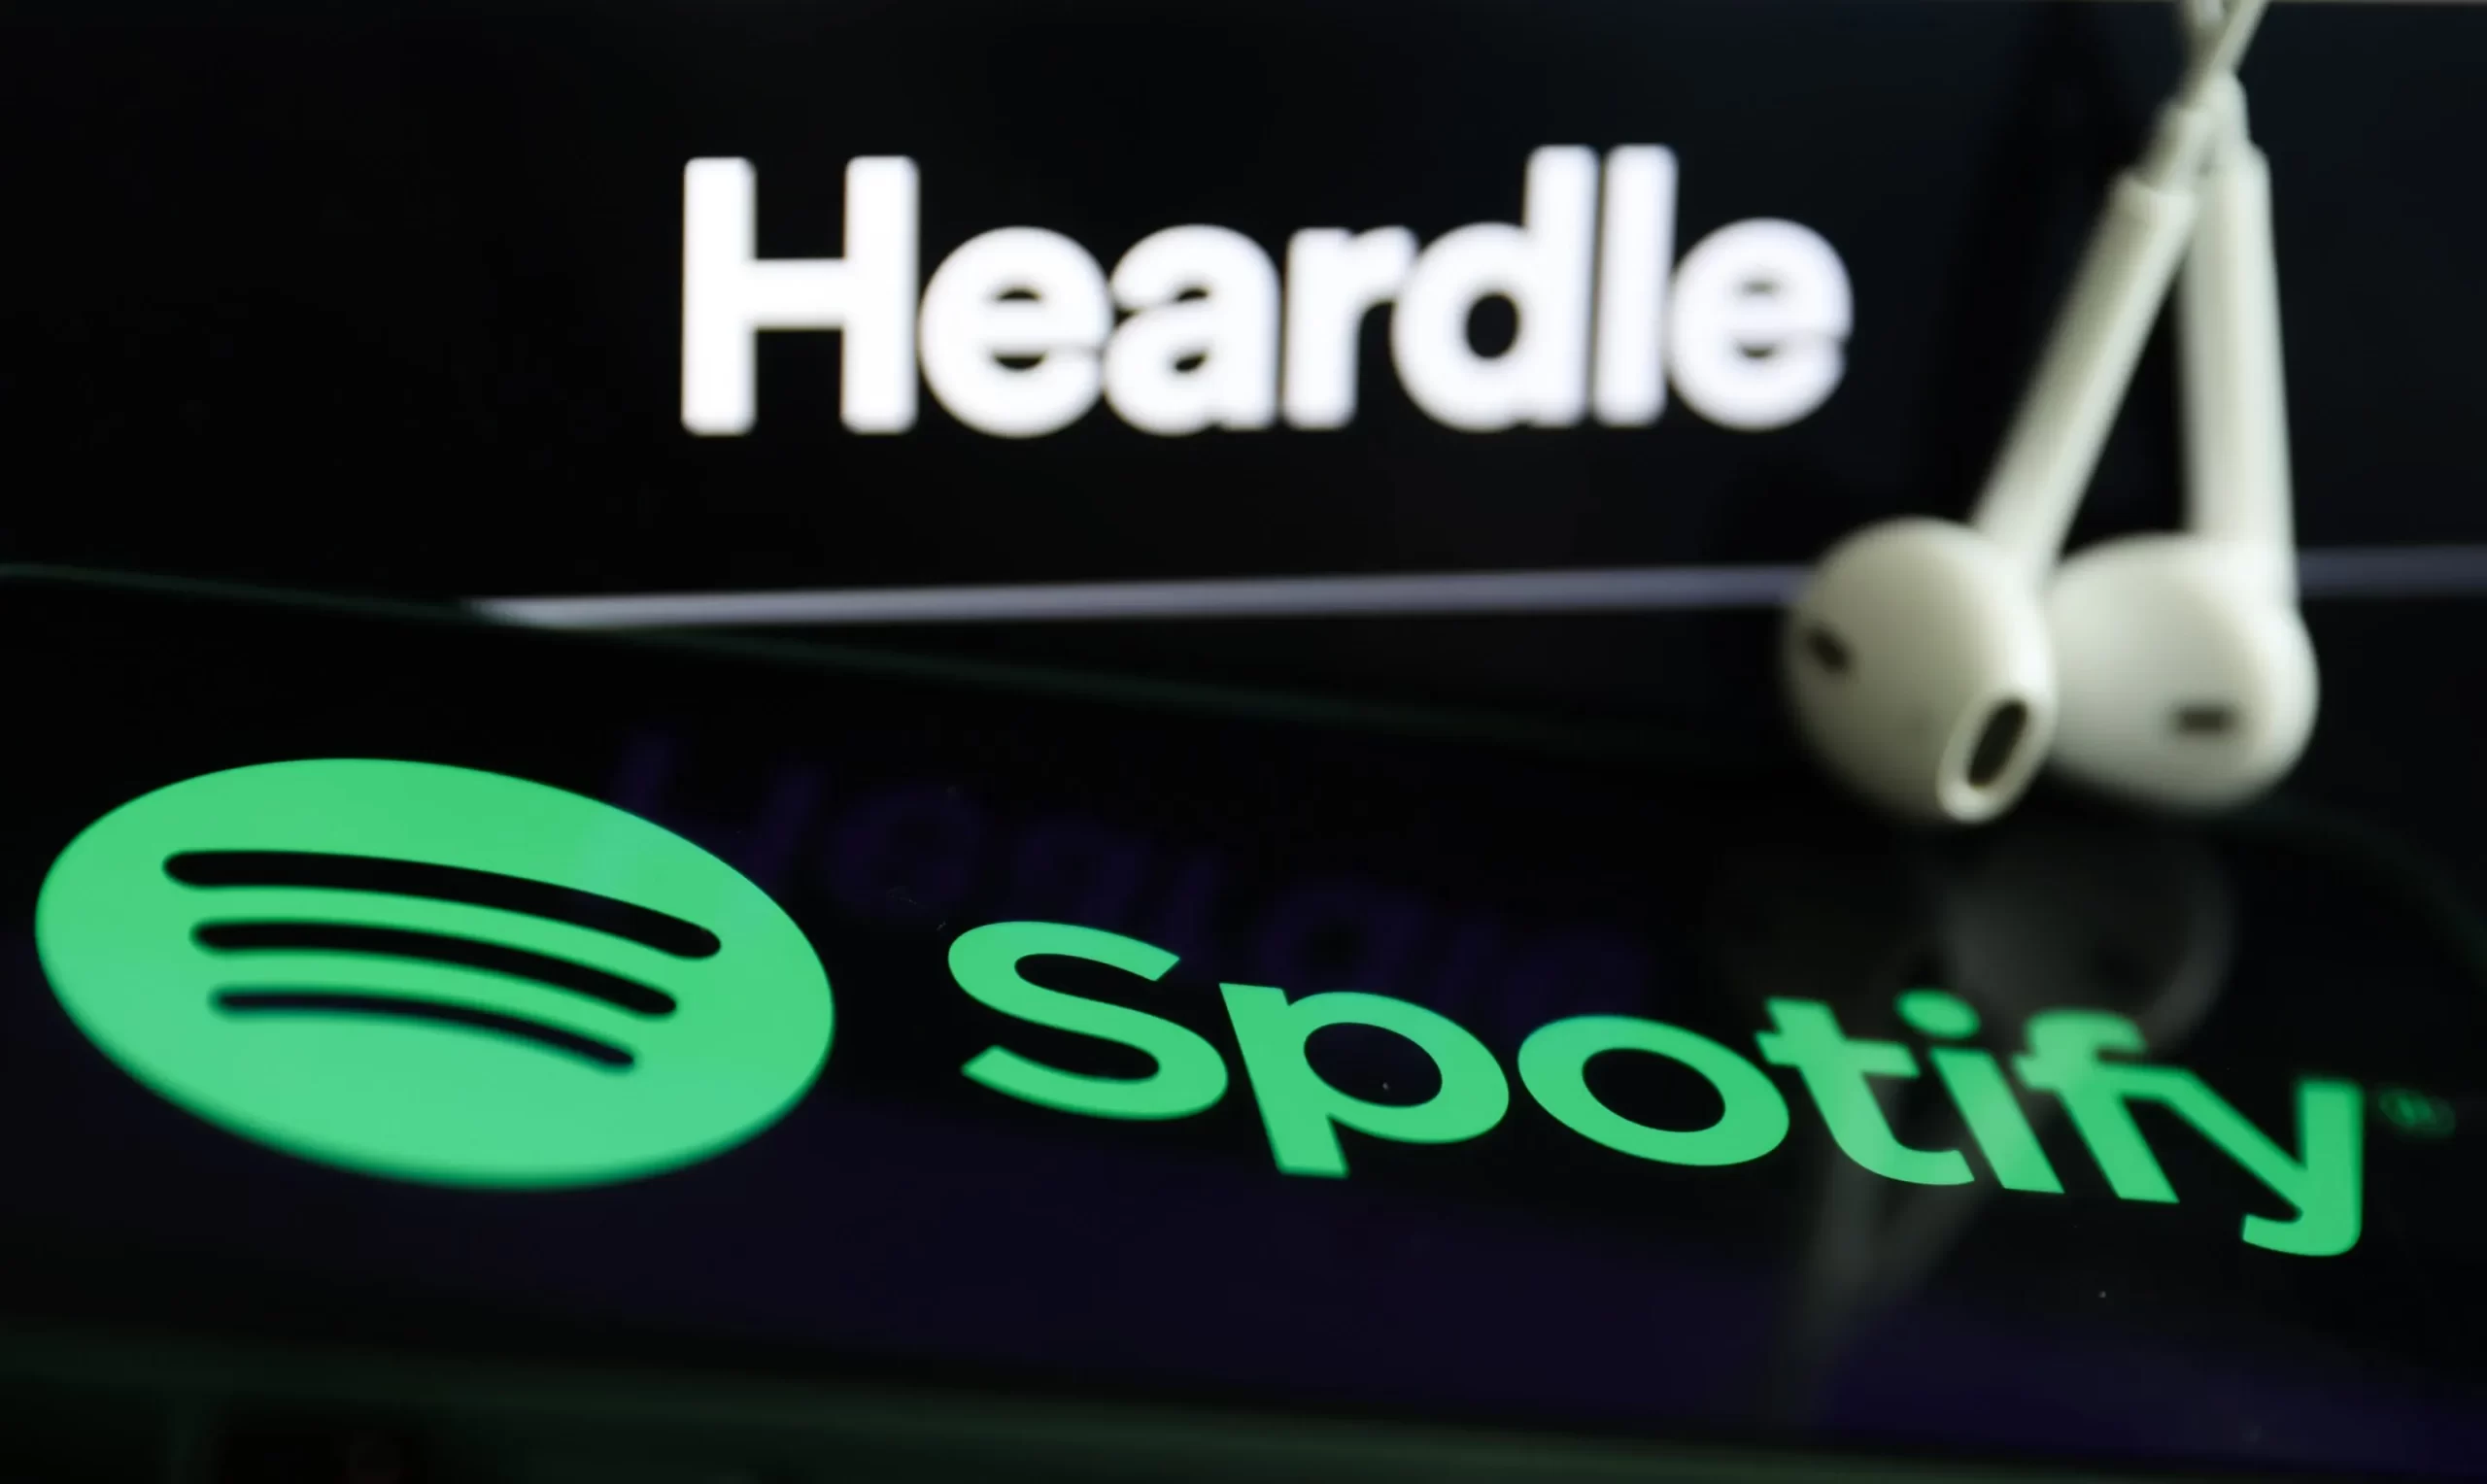 Spotify is shutting down Heardle